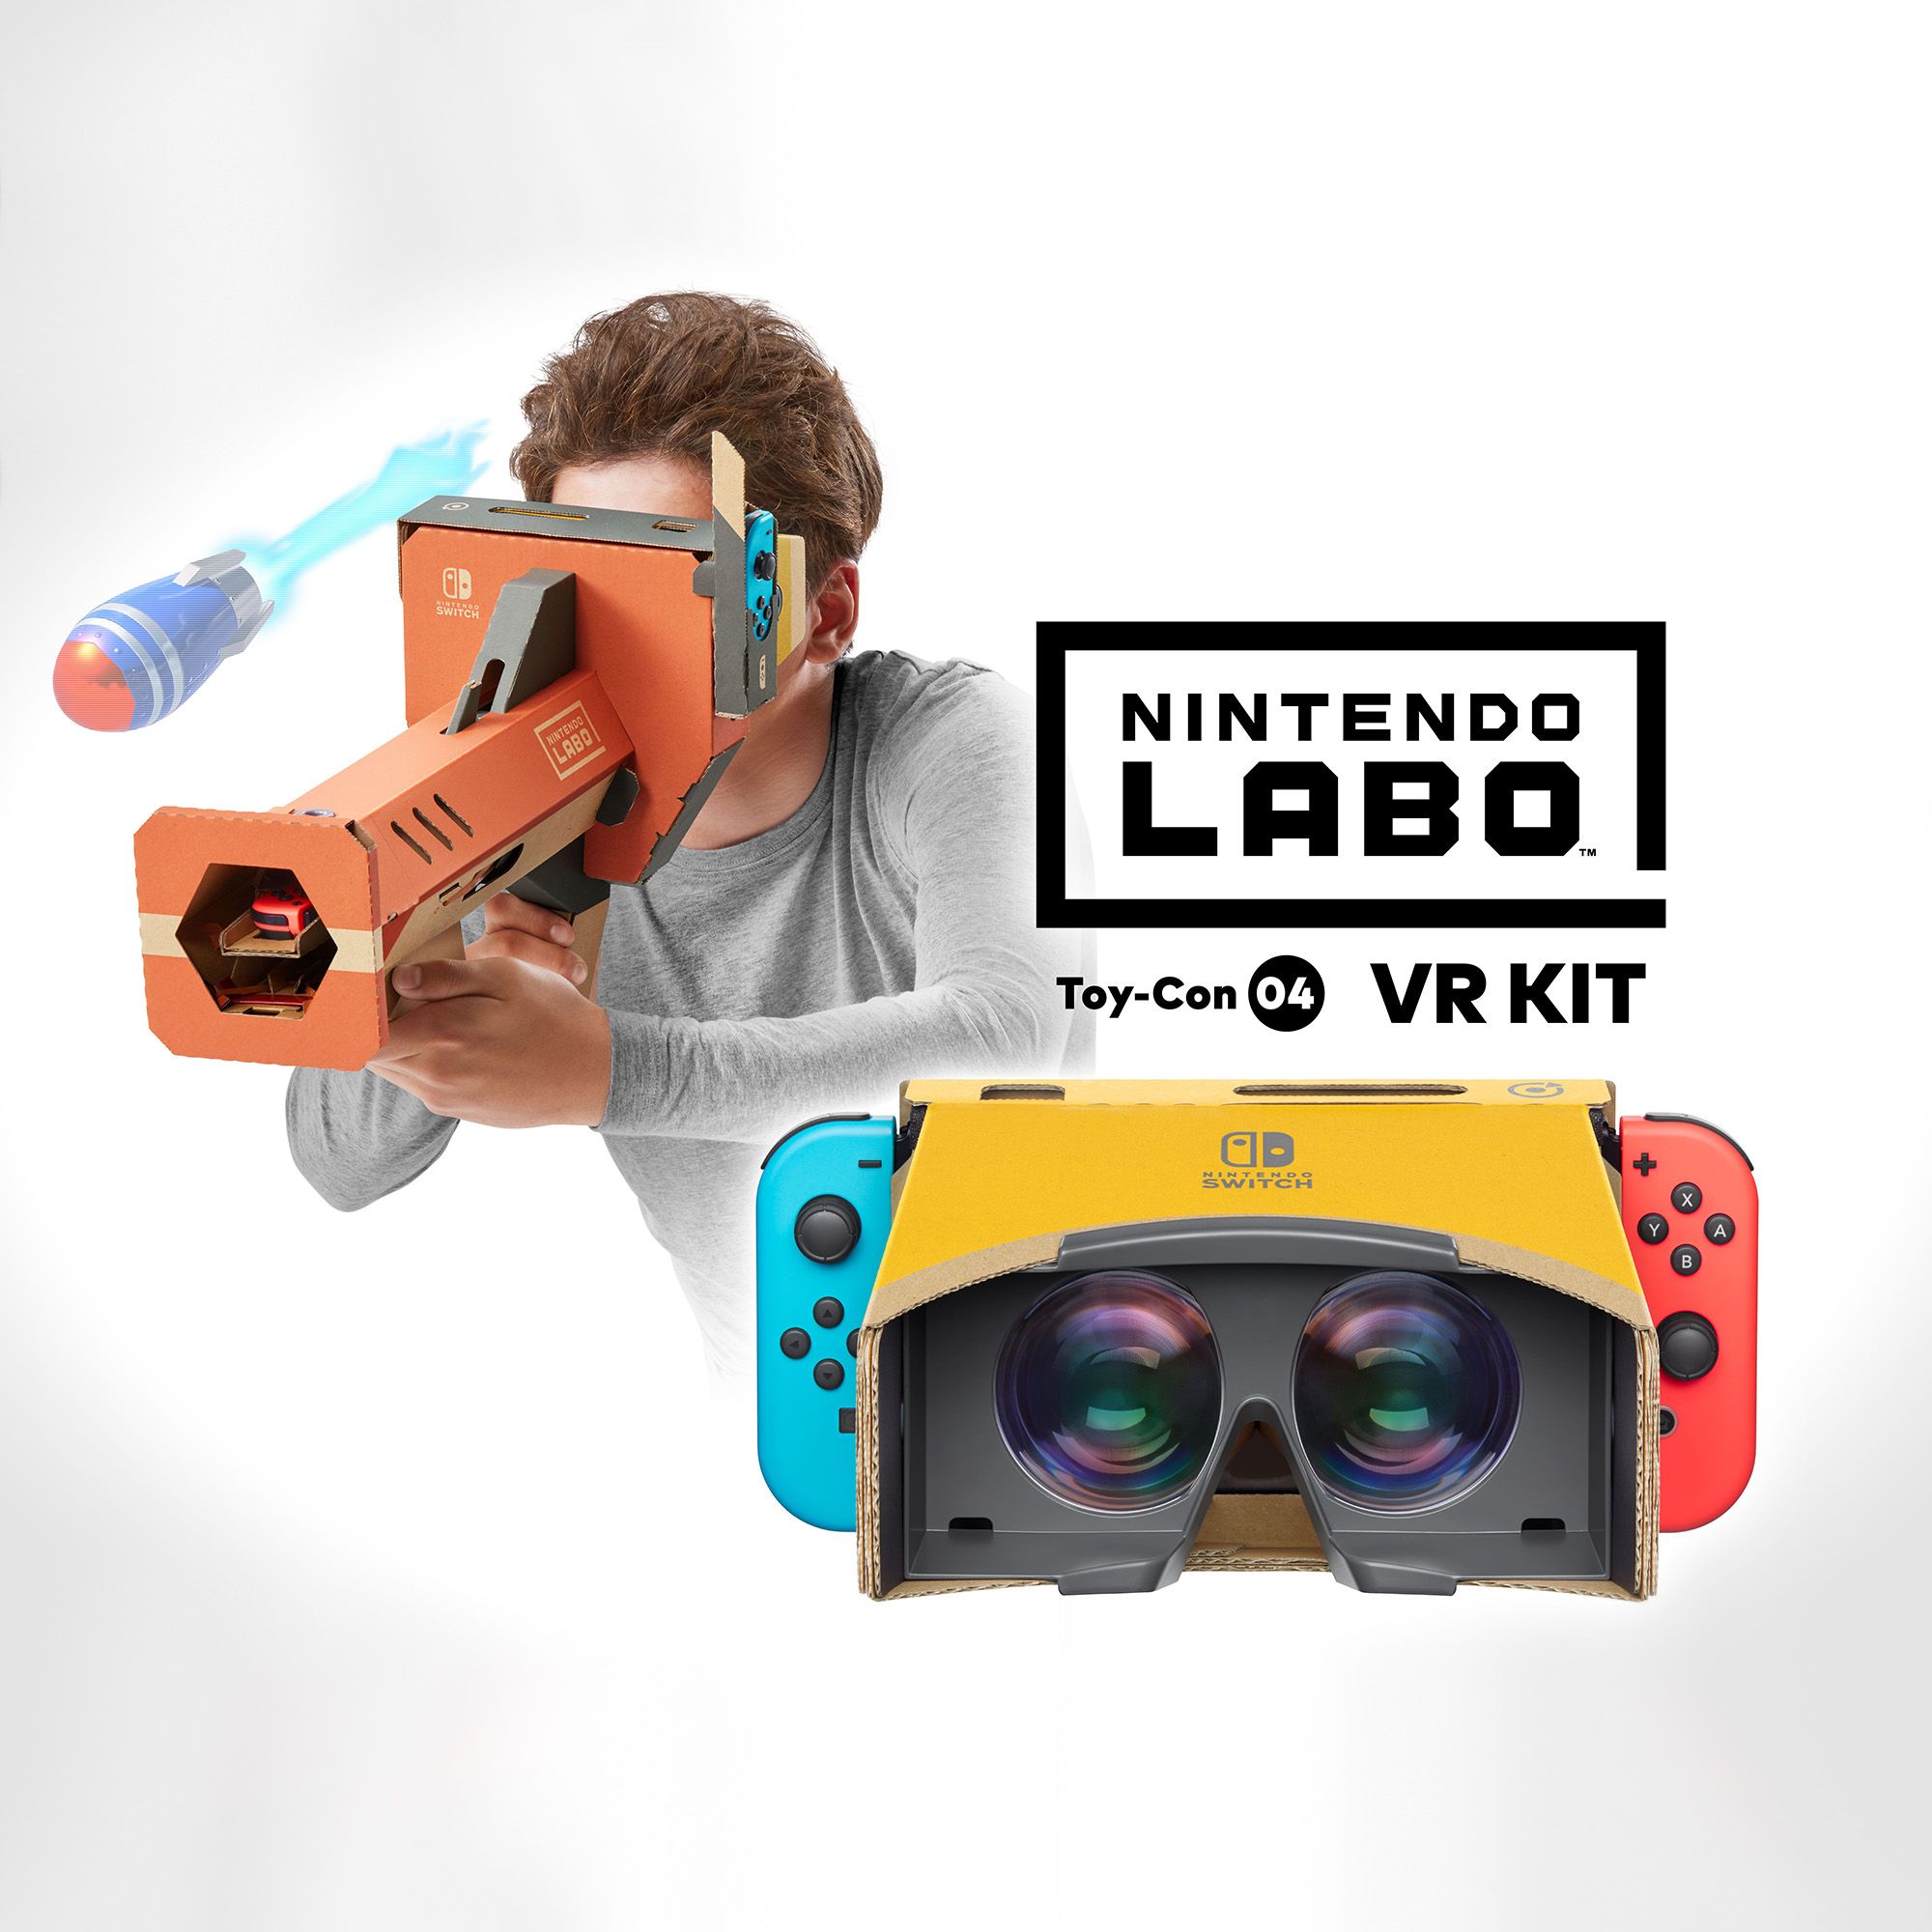 Nintendo Labo VR Kit - Cardboard cutouts have been so much fun